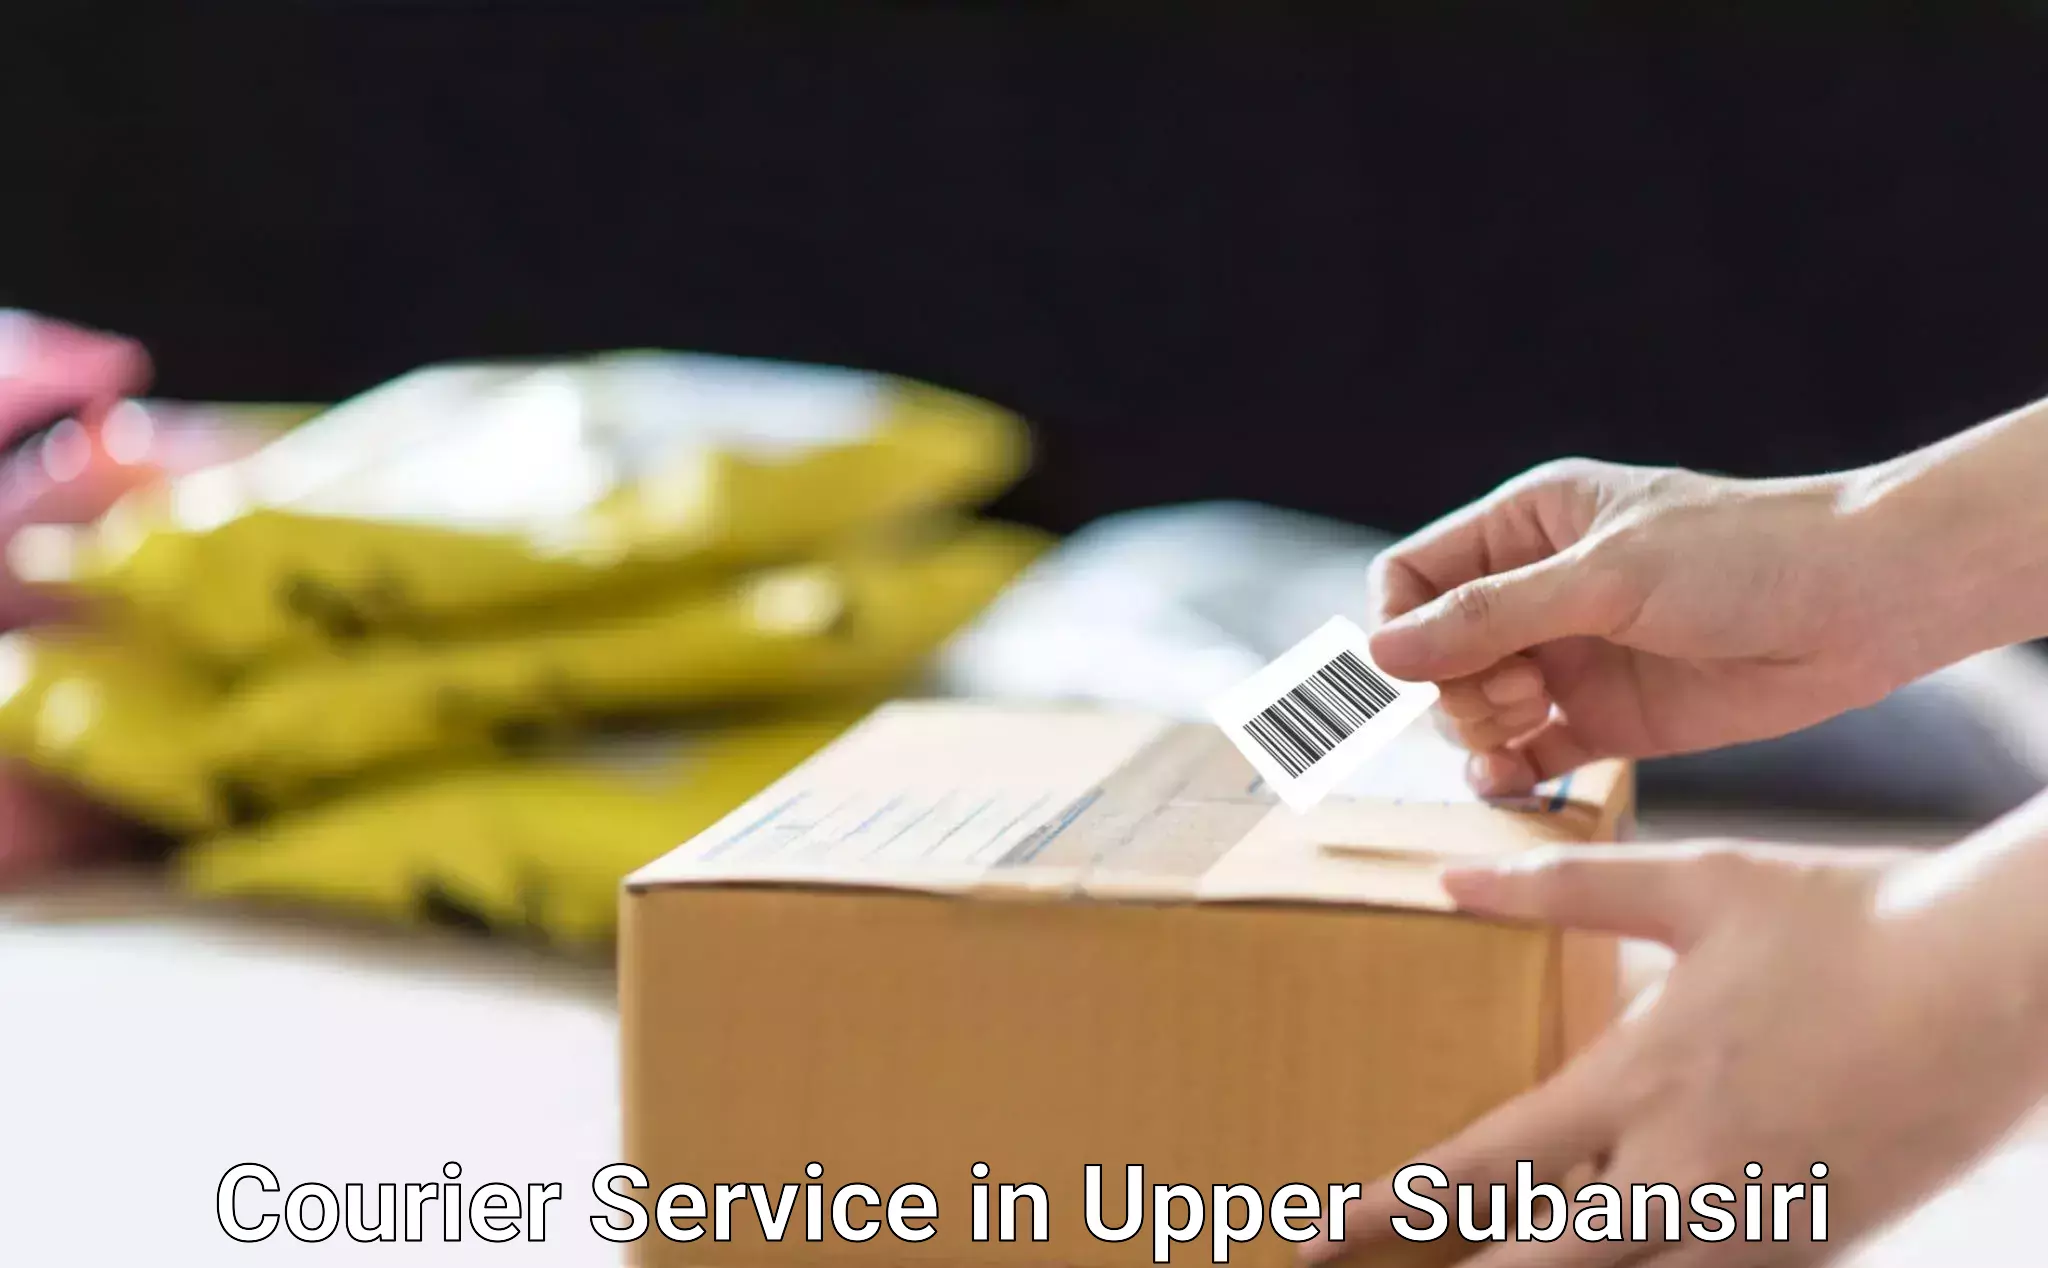 Next-generation courier services in Upper Subansiri